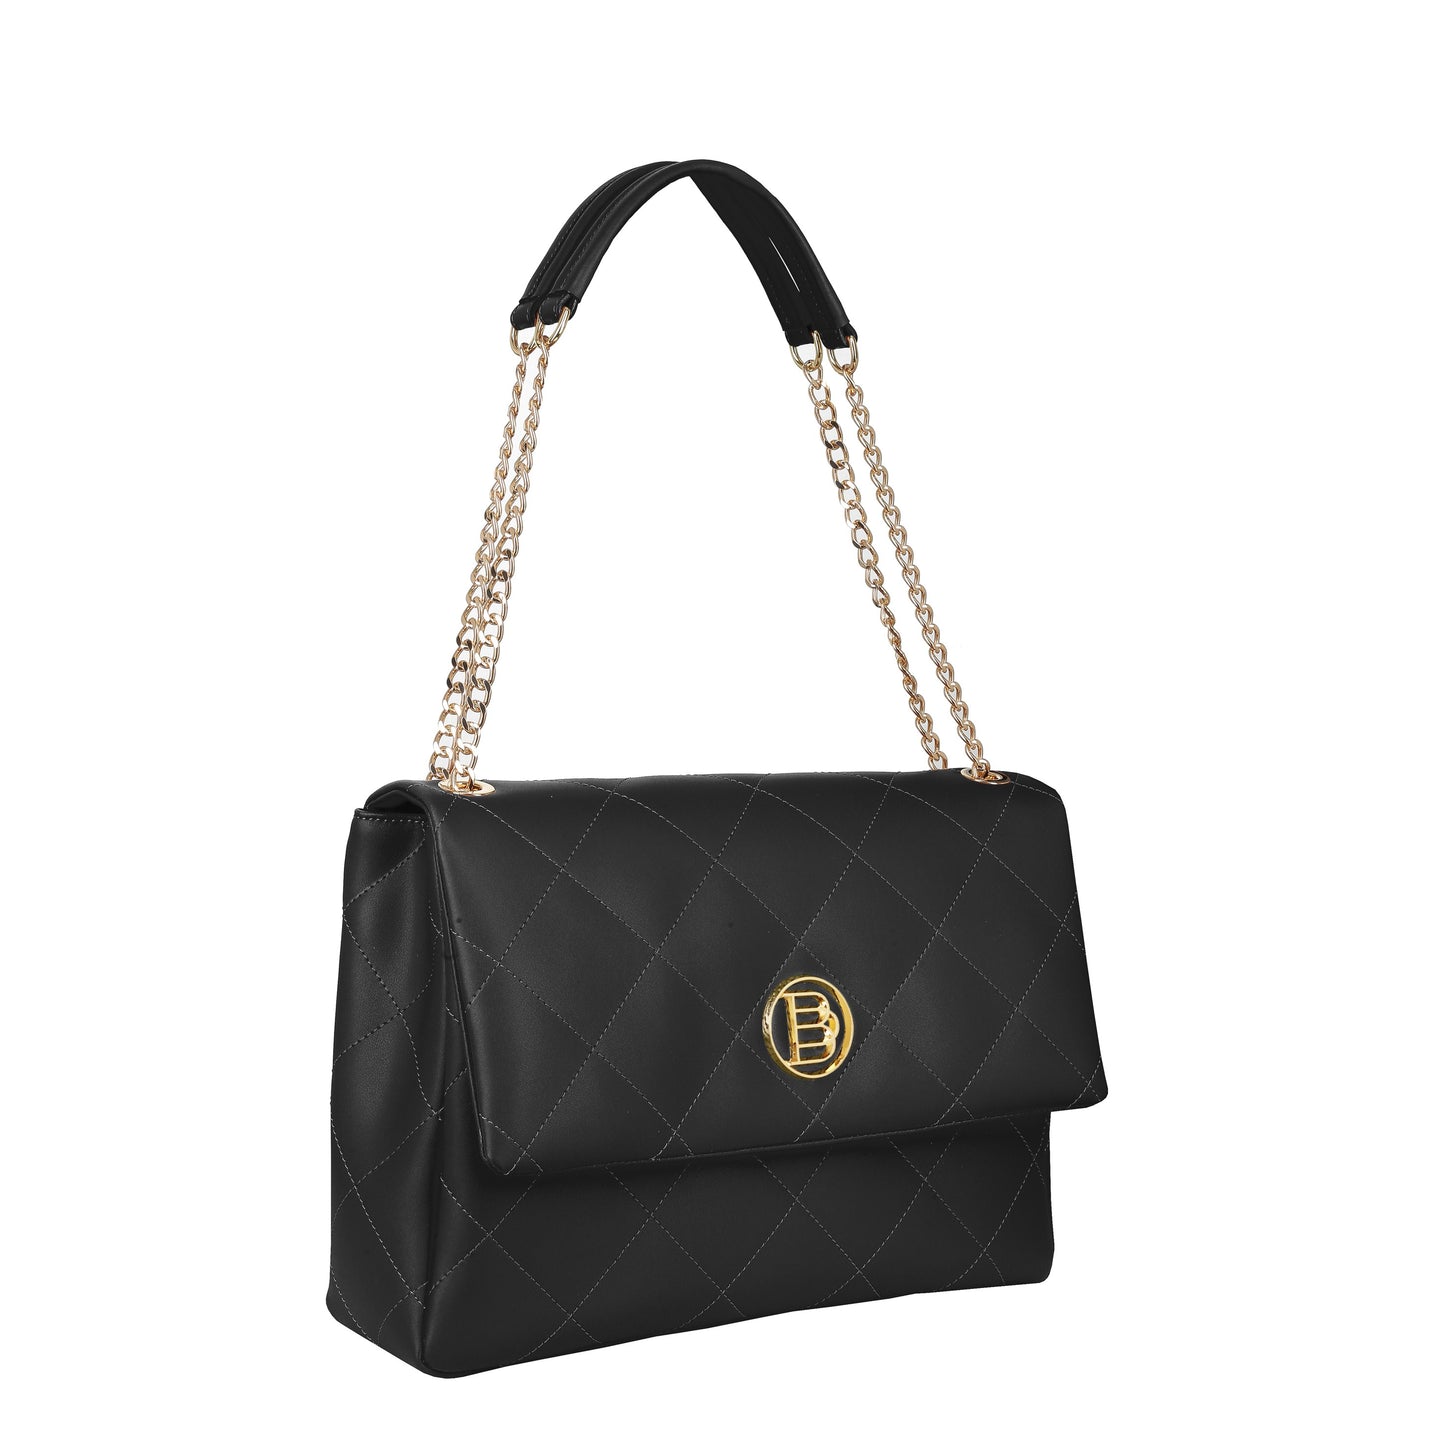 BLANCA NAPA BLACK women's leather handbag